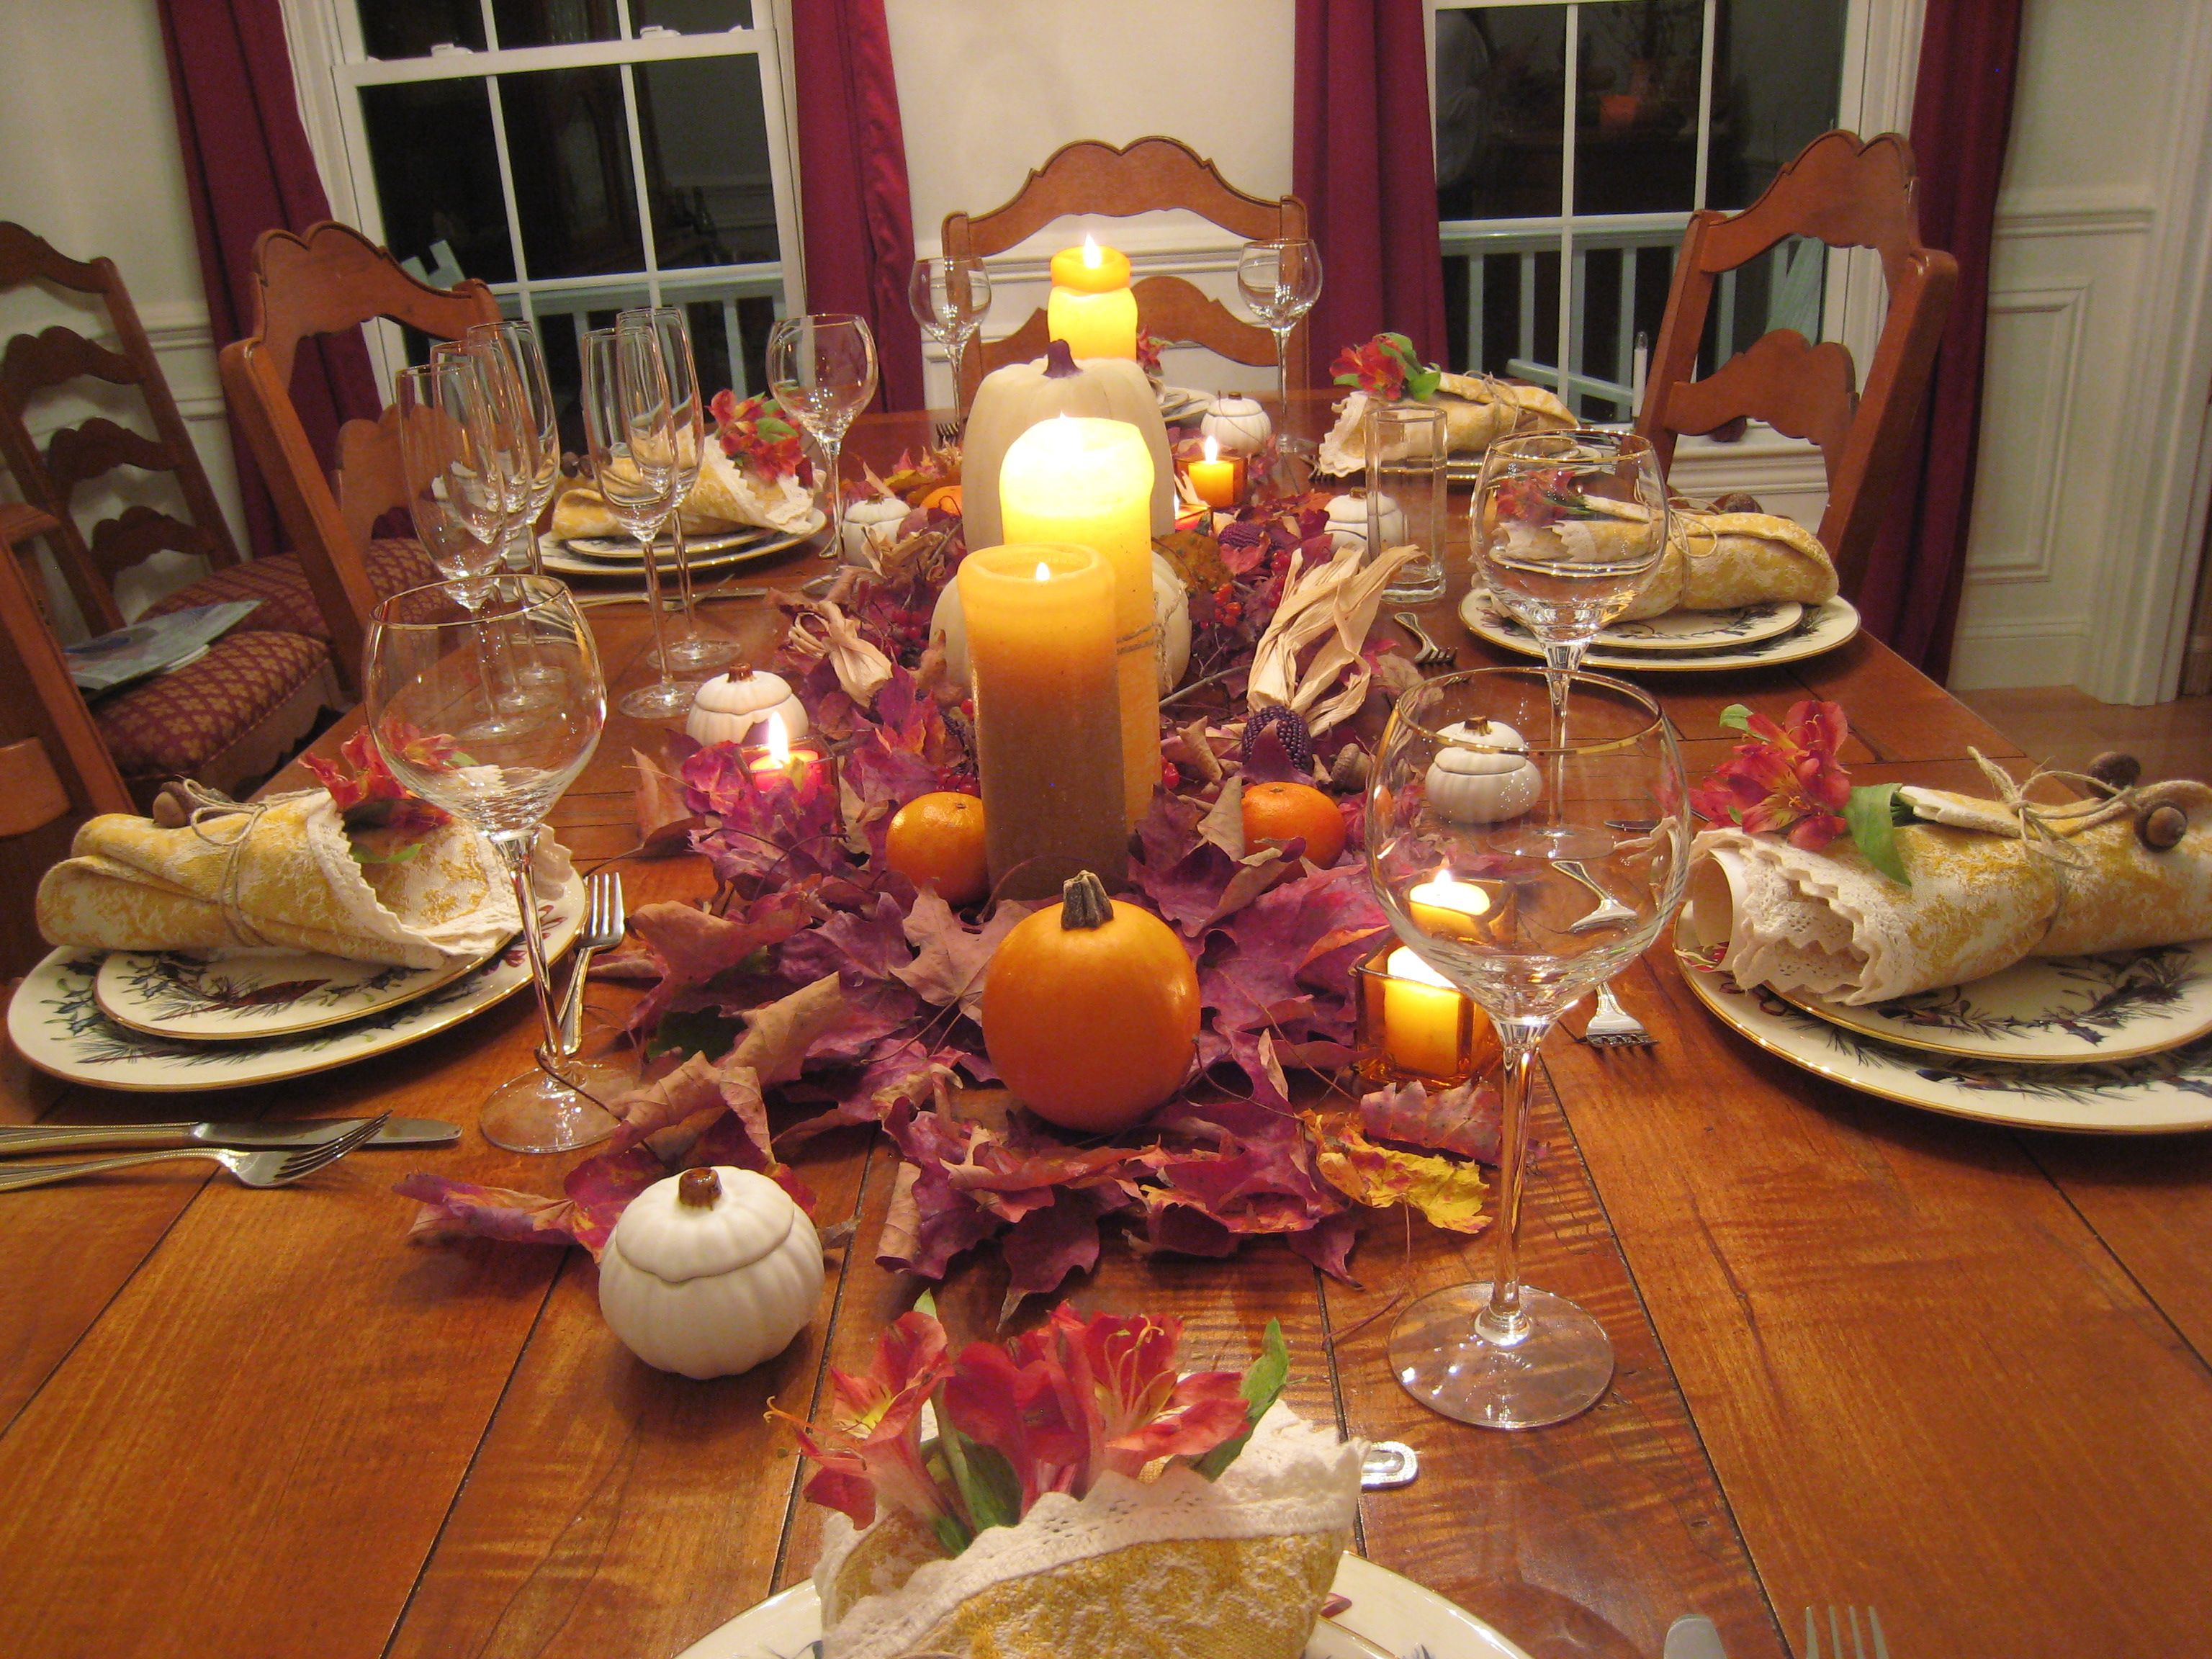 Thanksgiving Table Decorations Pinterest
 Thanksgiving Table setting & decorations